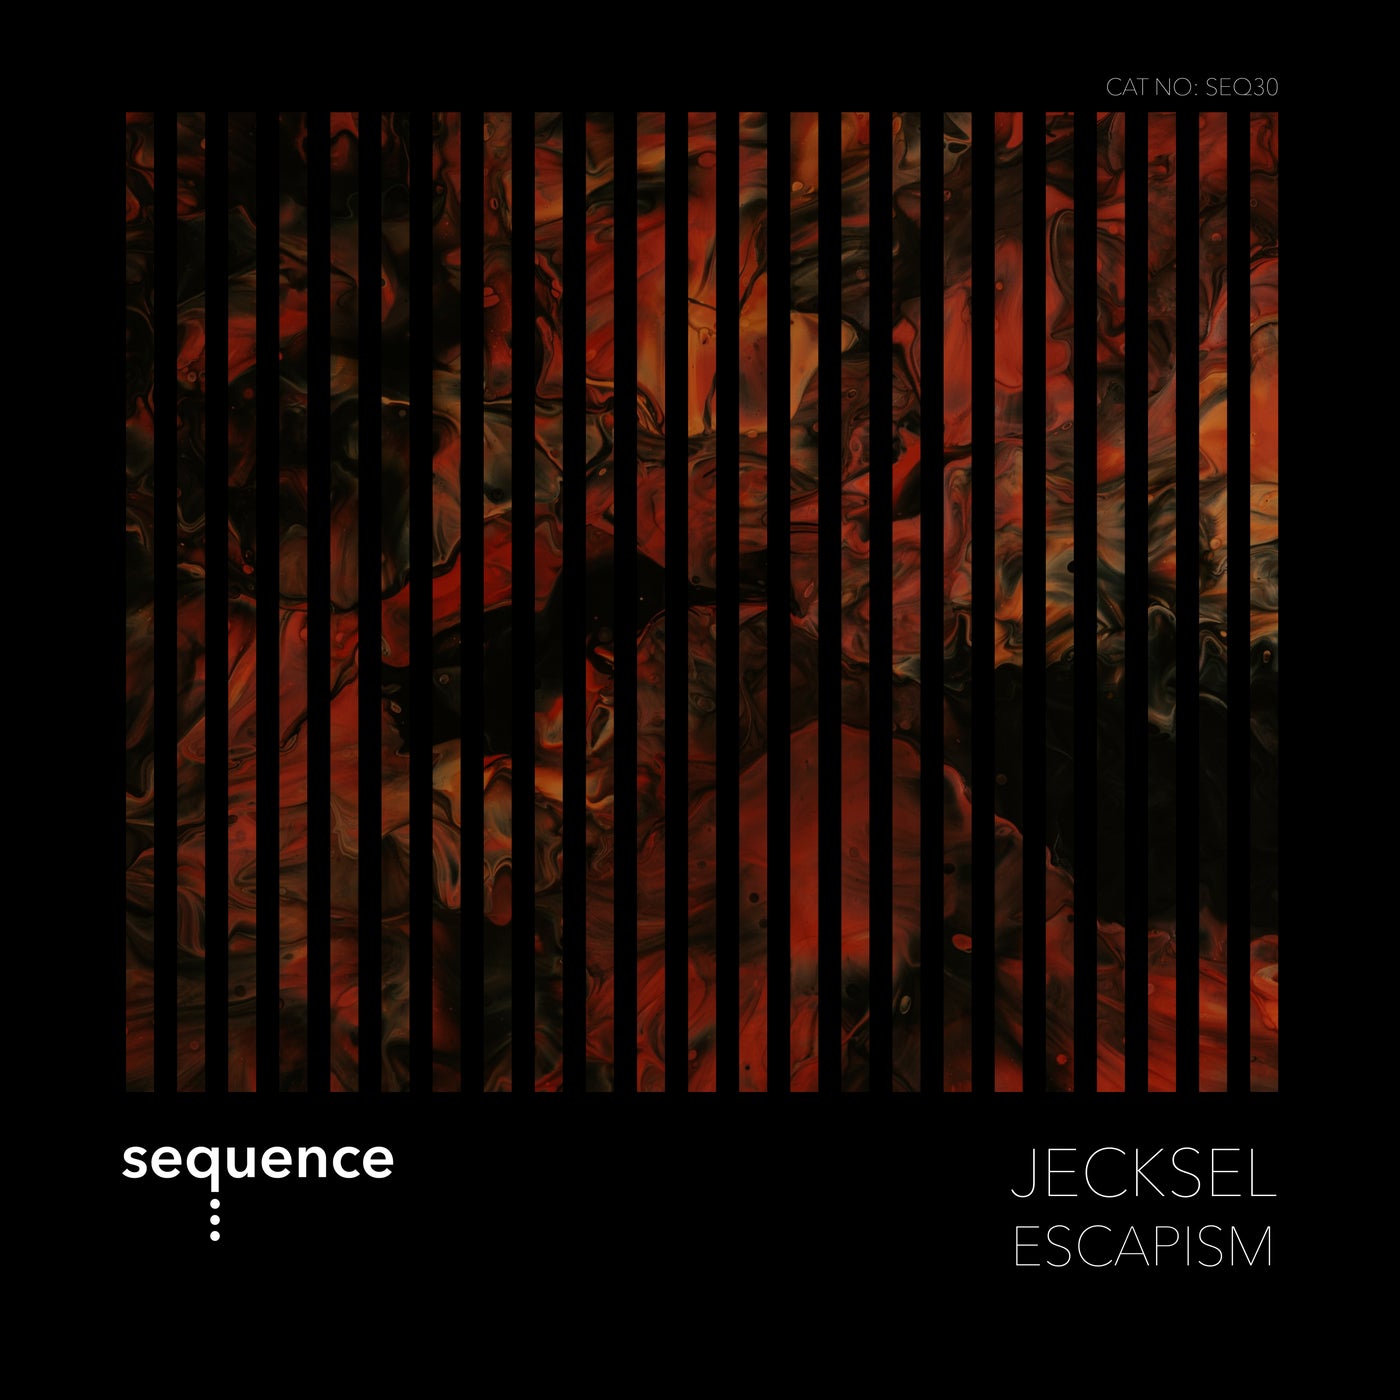 Jecksel - Escapism [SEQ030]